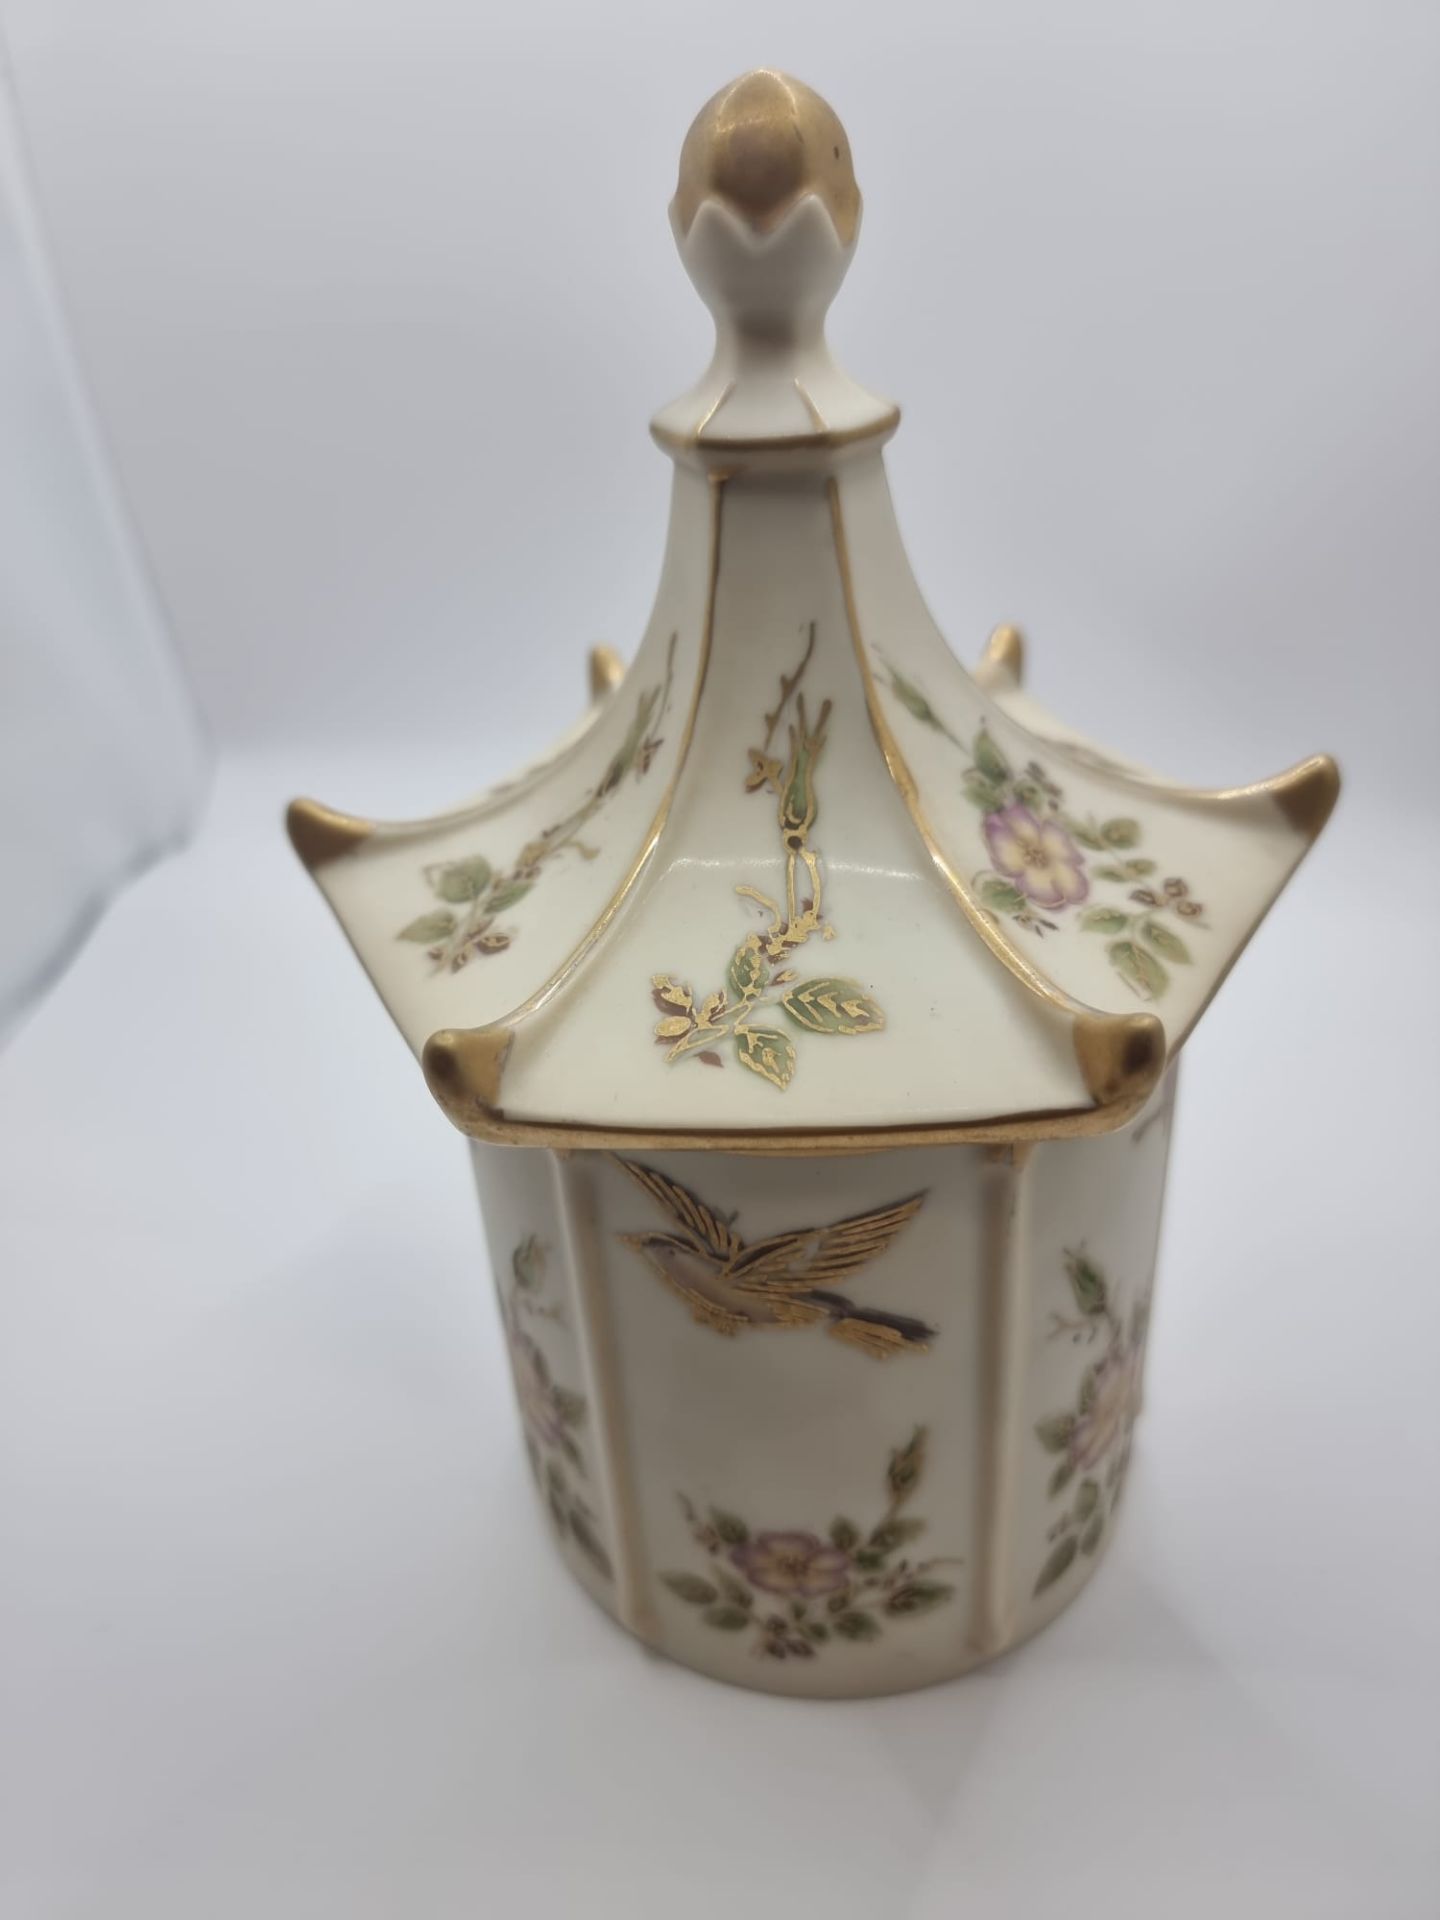 Lenwile China Ardalt beautiful hand painted porcelain Pagoda tea or apothecary jar - Image 6 of 6